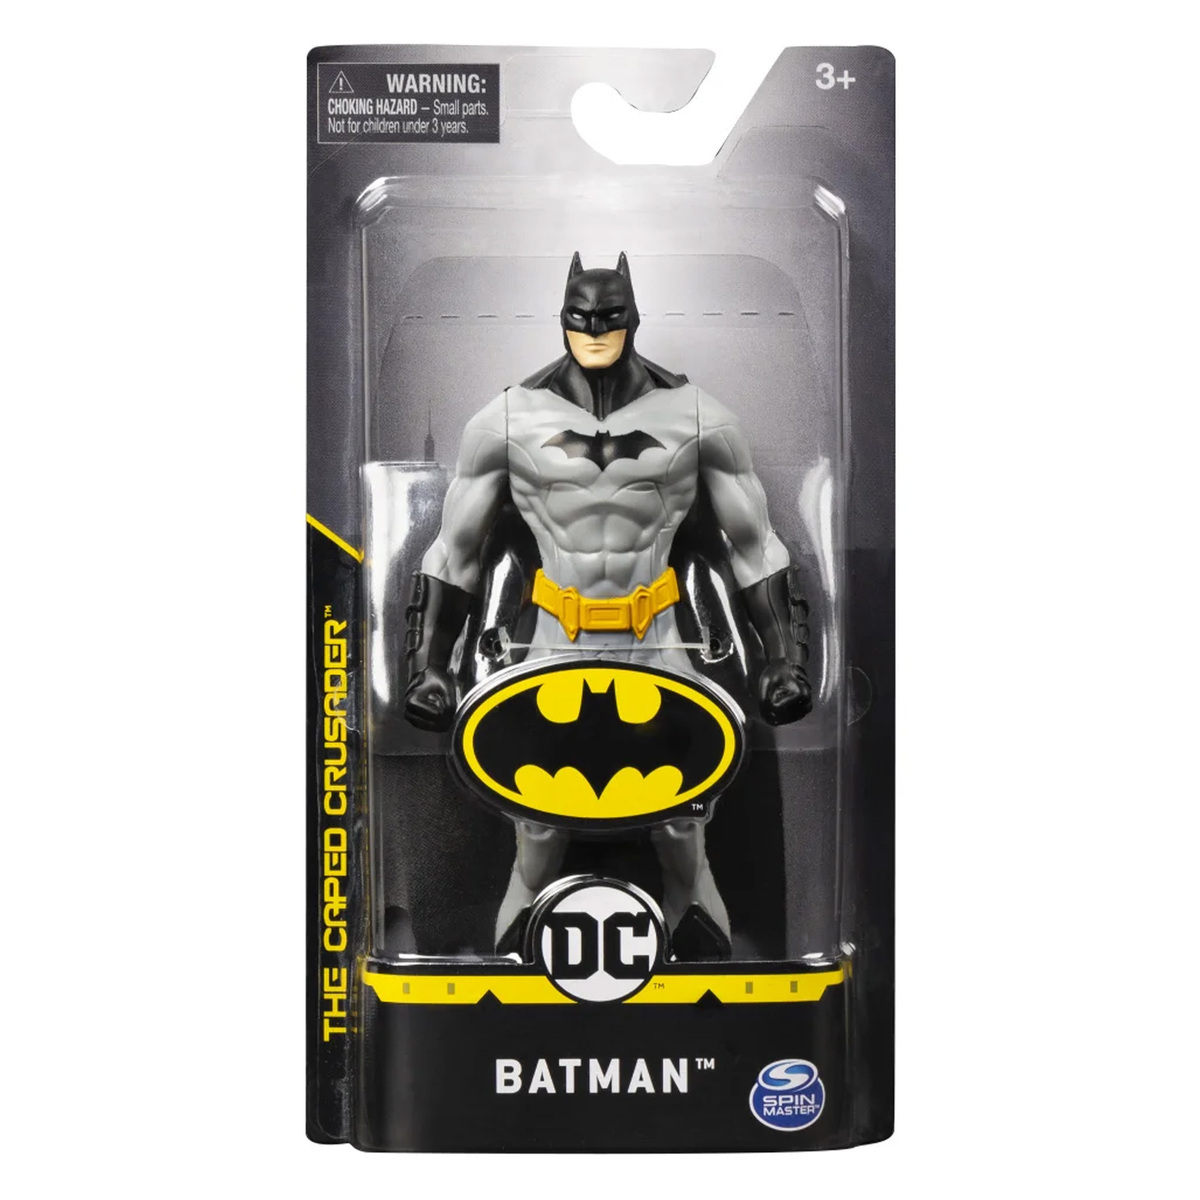 DC Batman Caped Crusader Figure, 6 inches, Assorted, 6055412